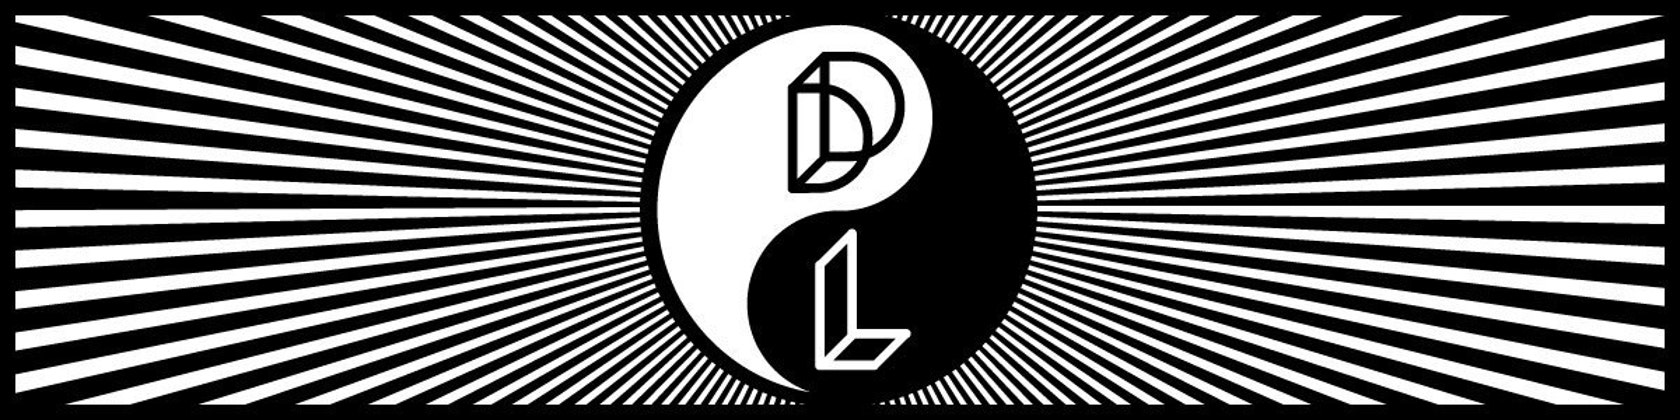 Dualitylab Original Dock Ellis Tie-dye Baseball Jersey -  New